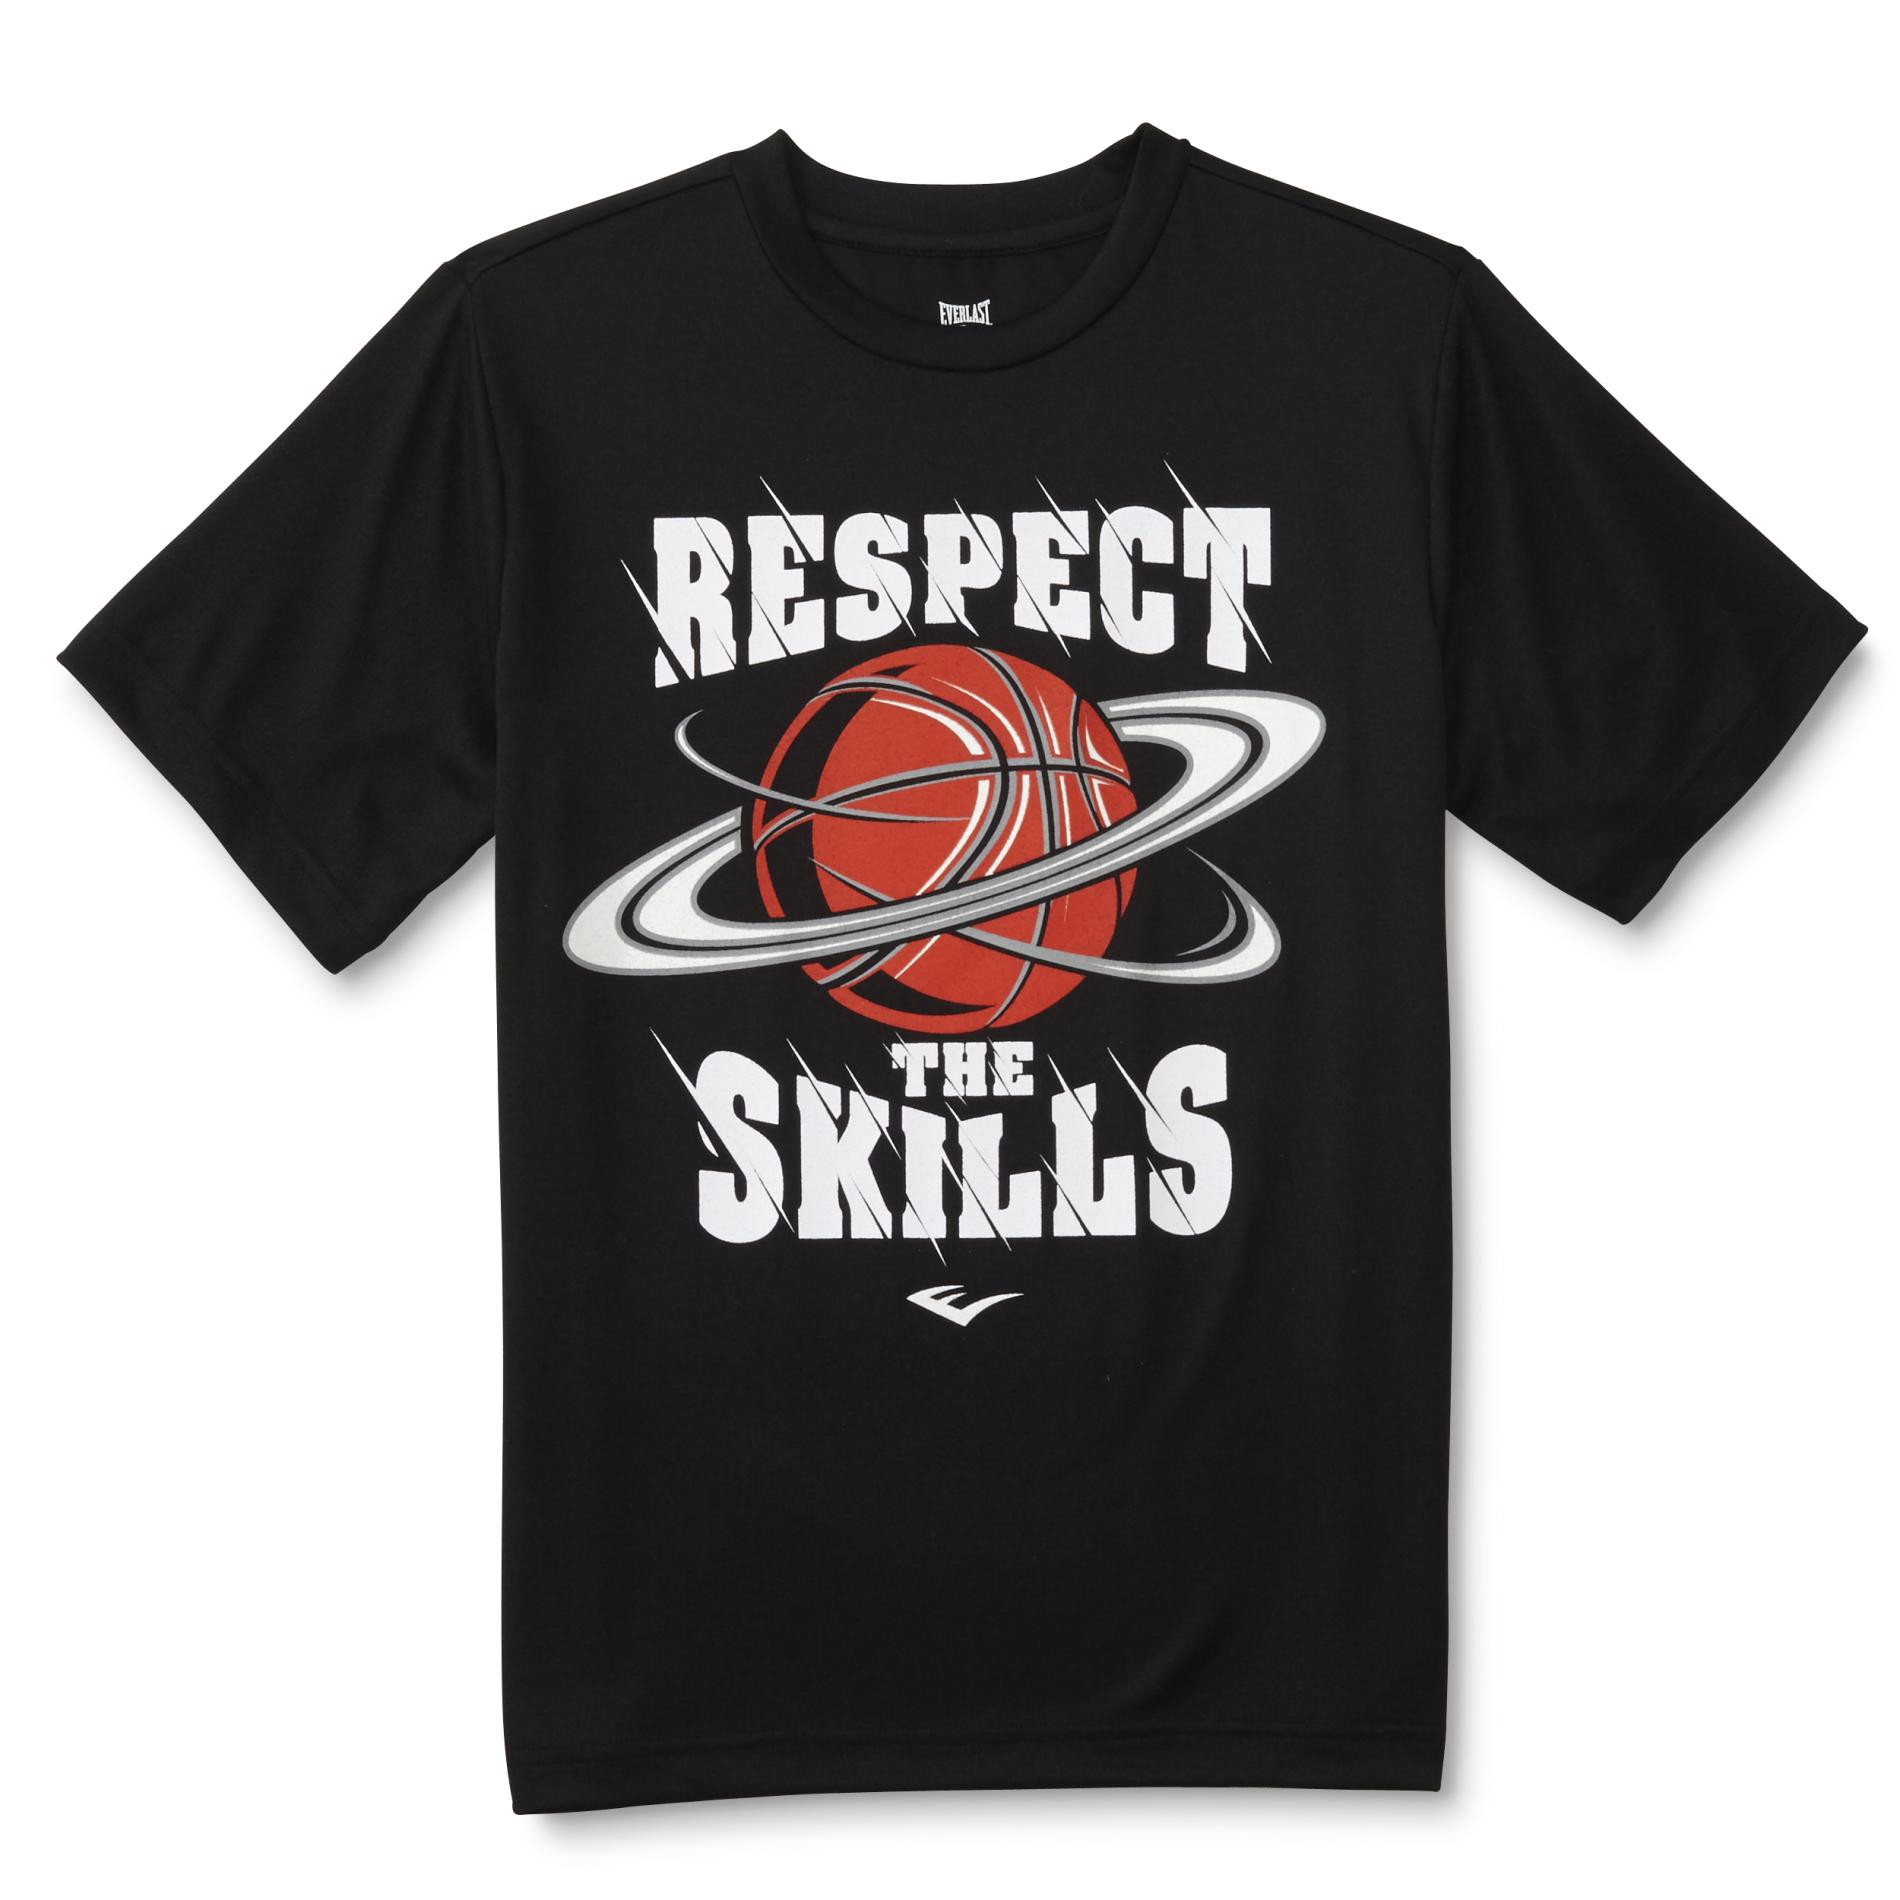 Everlast&reg; Boy's Graphic Athletic T-Shirt - Respect the Skills